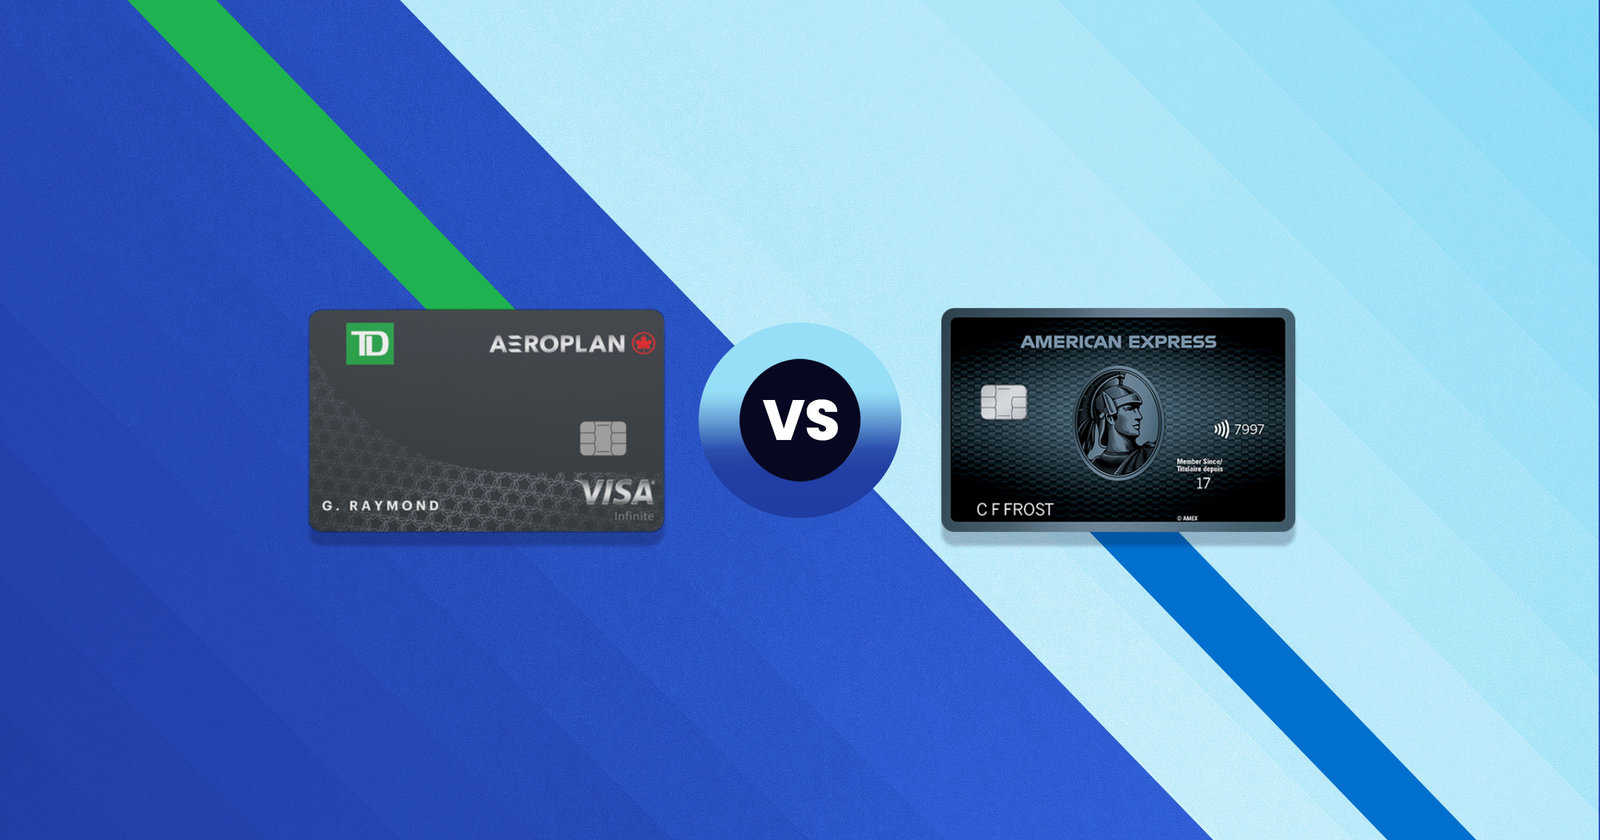 American Express Cobalt Card vs. TD Aeroplan Visa Infinite Card